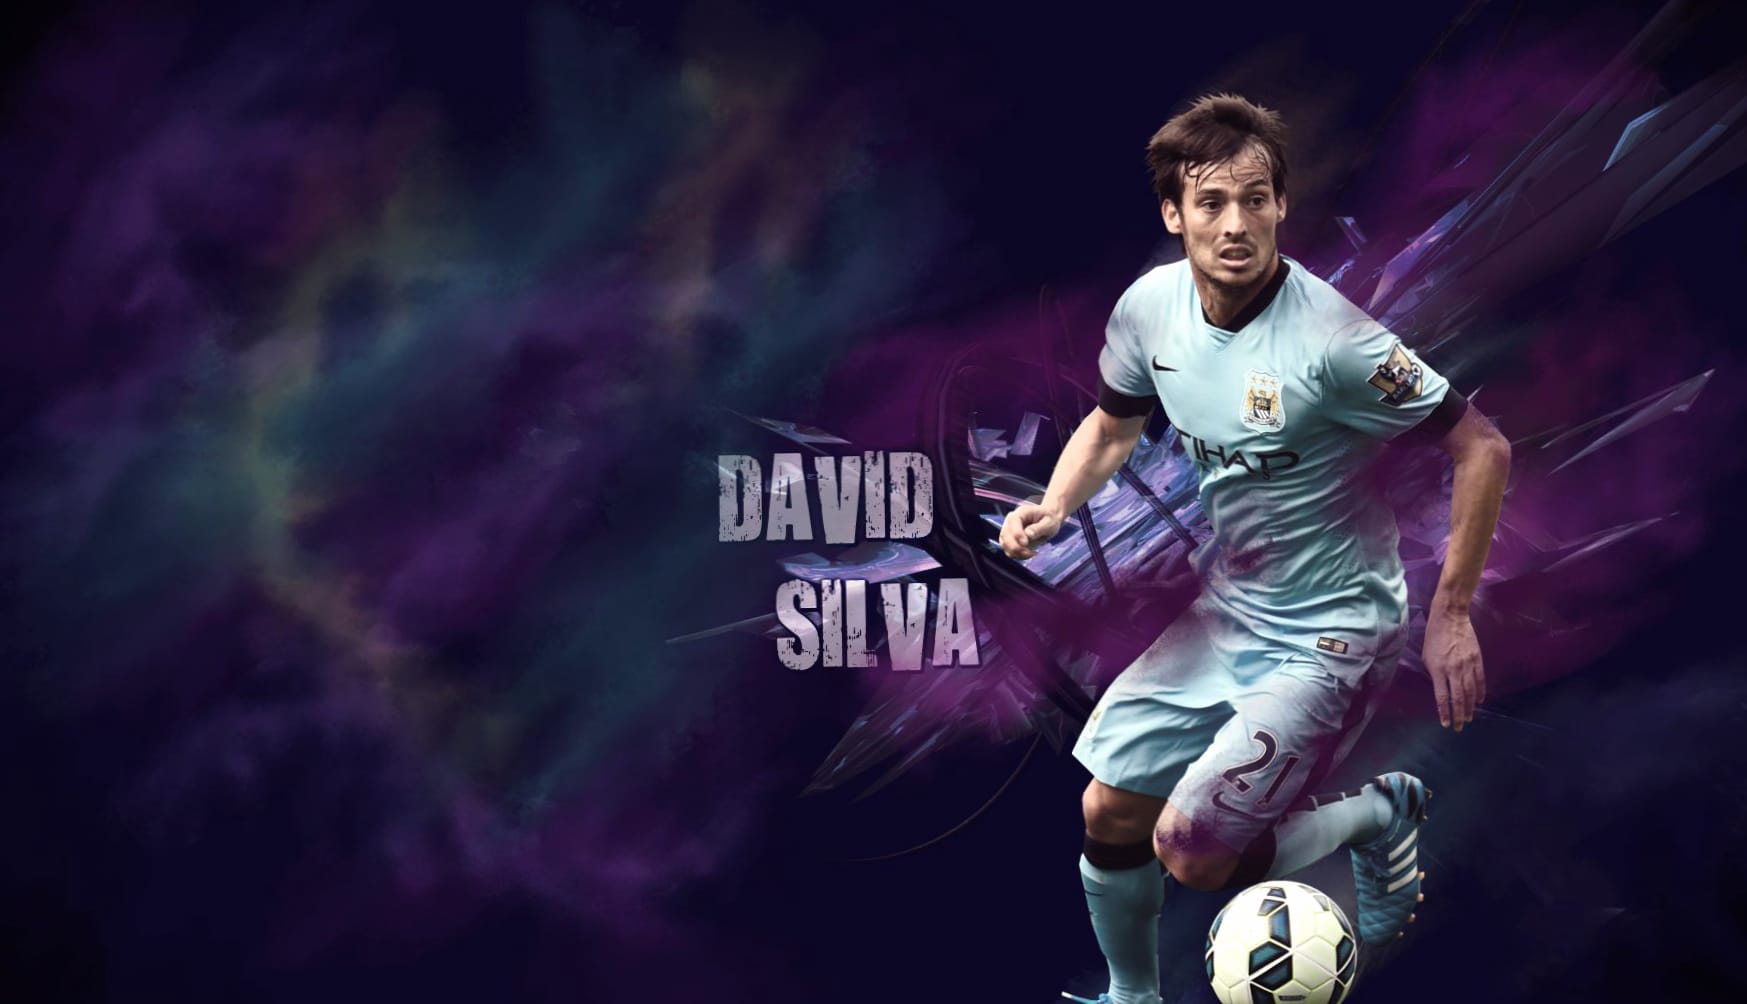 David Silva at 1280 x 960 size wallpapers HD quality